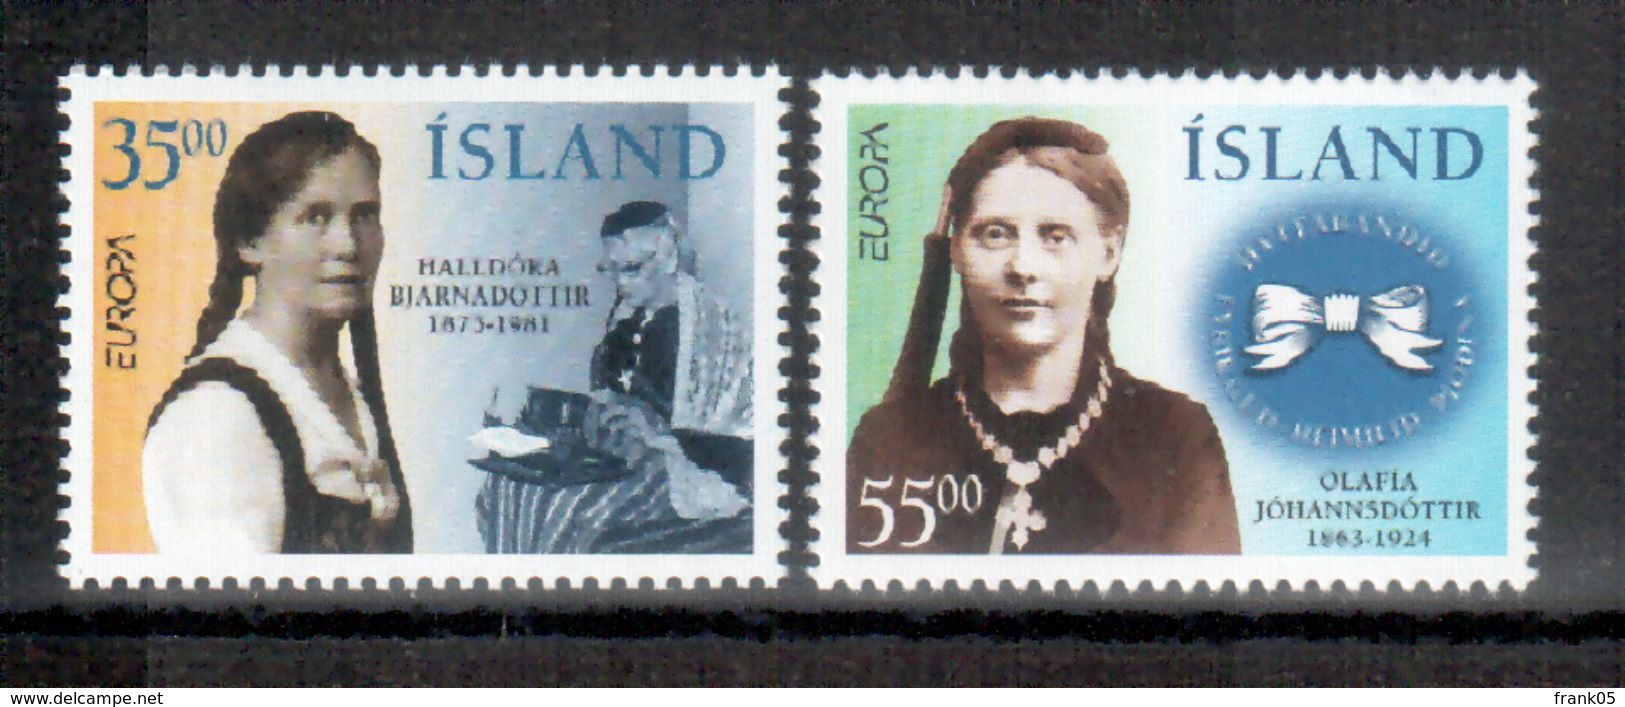 Island / Iceland / Islande 1996 Satz/set EUROPA ** - 1996